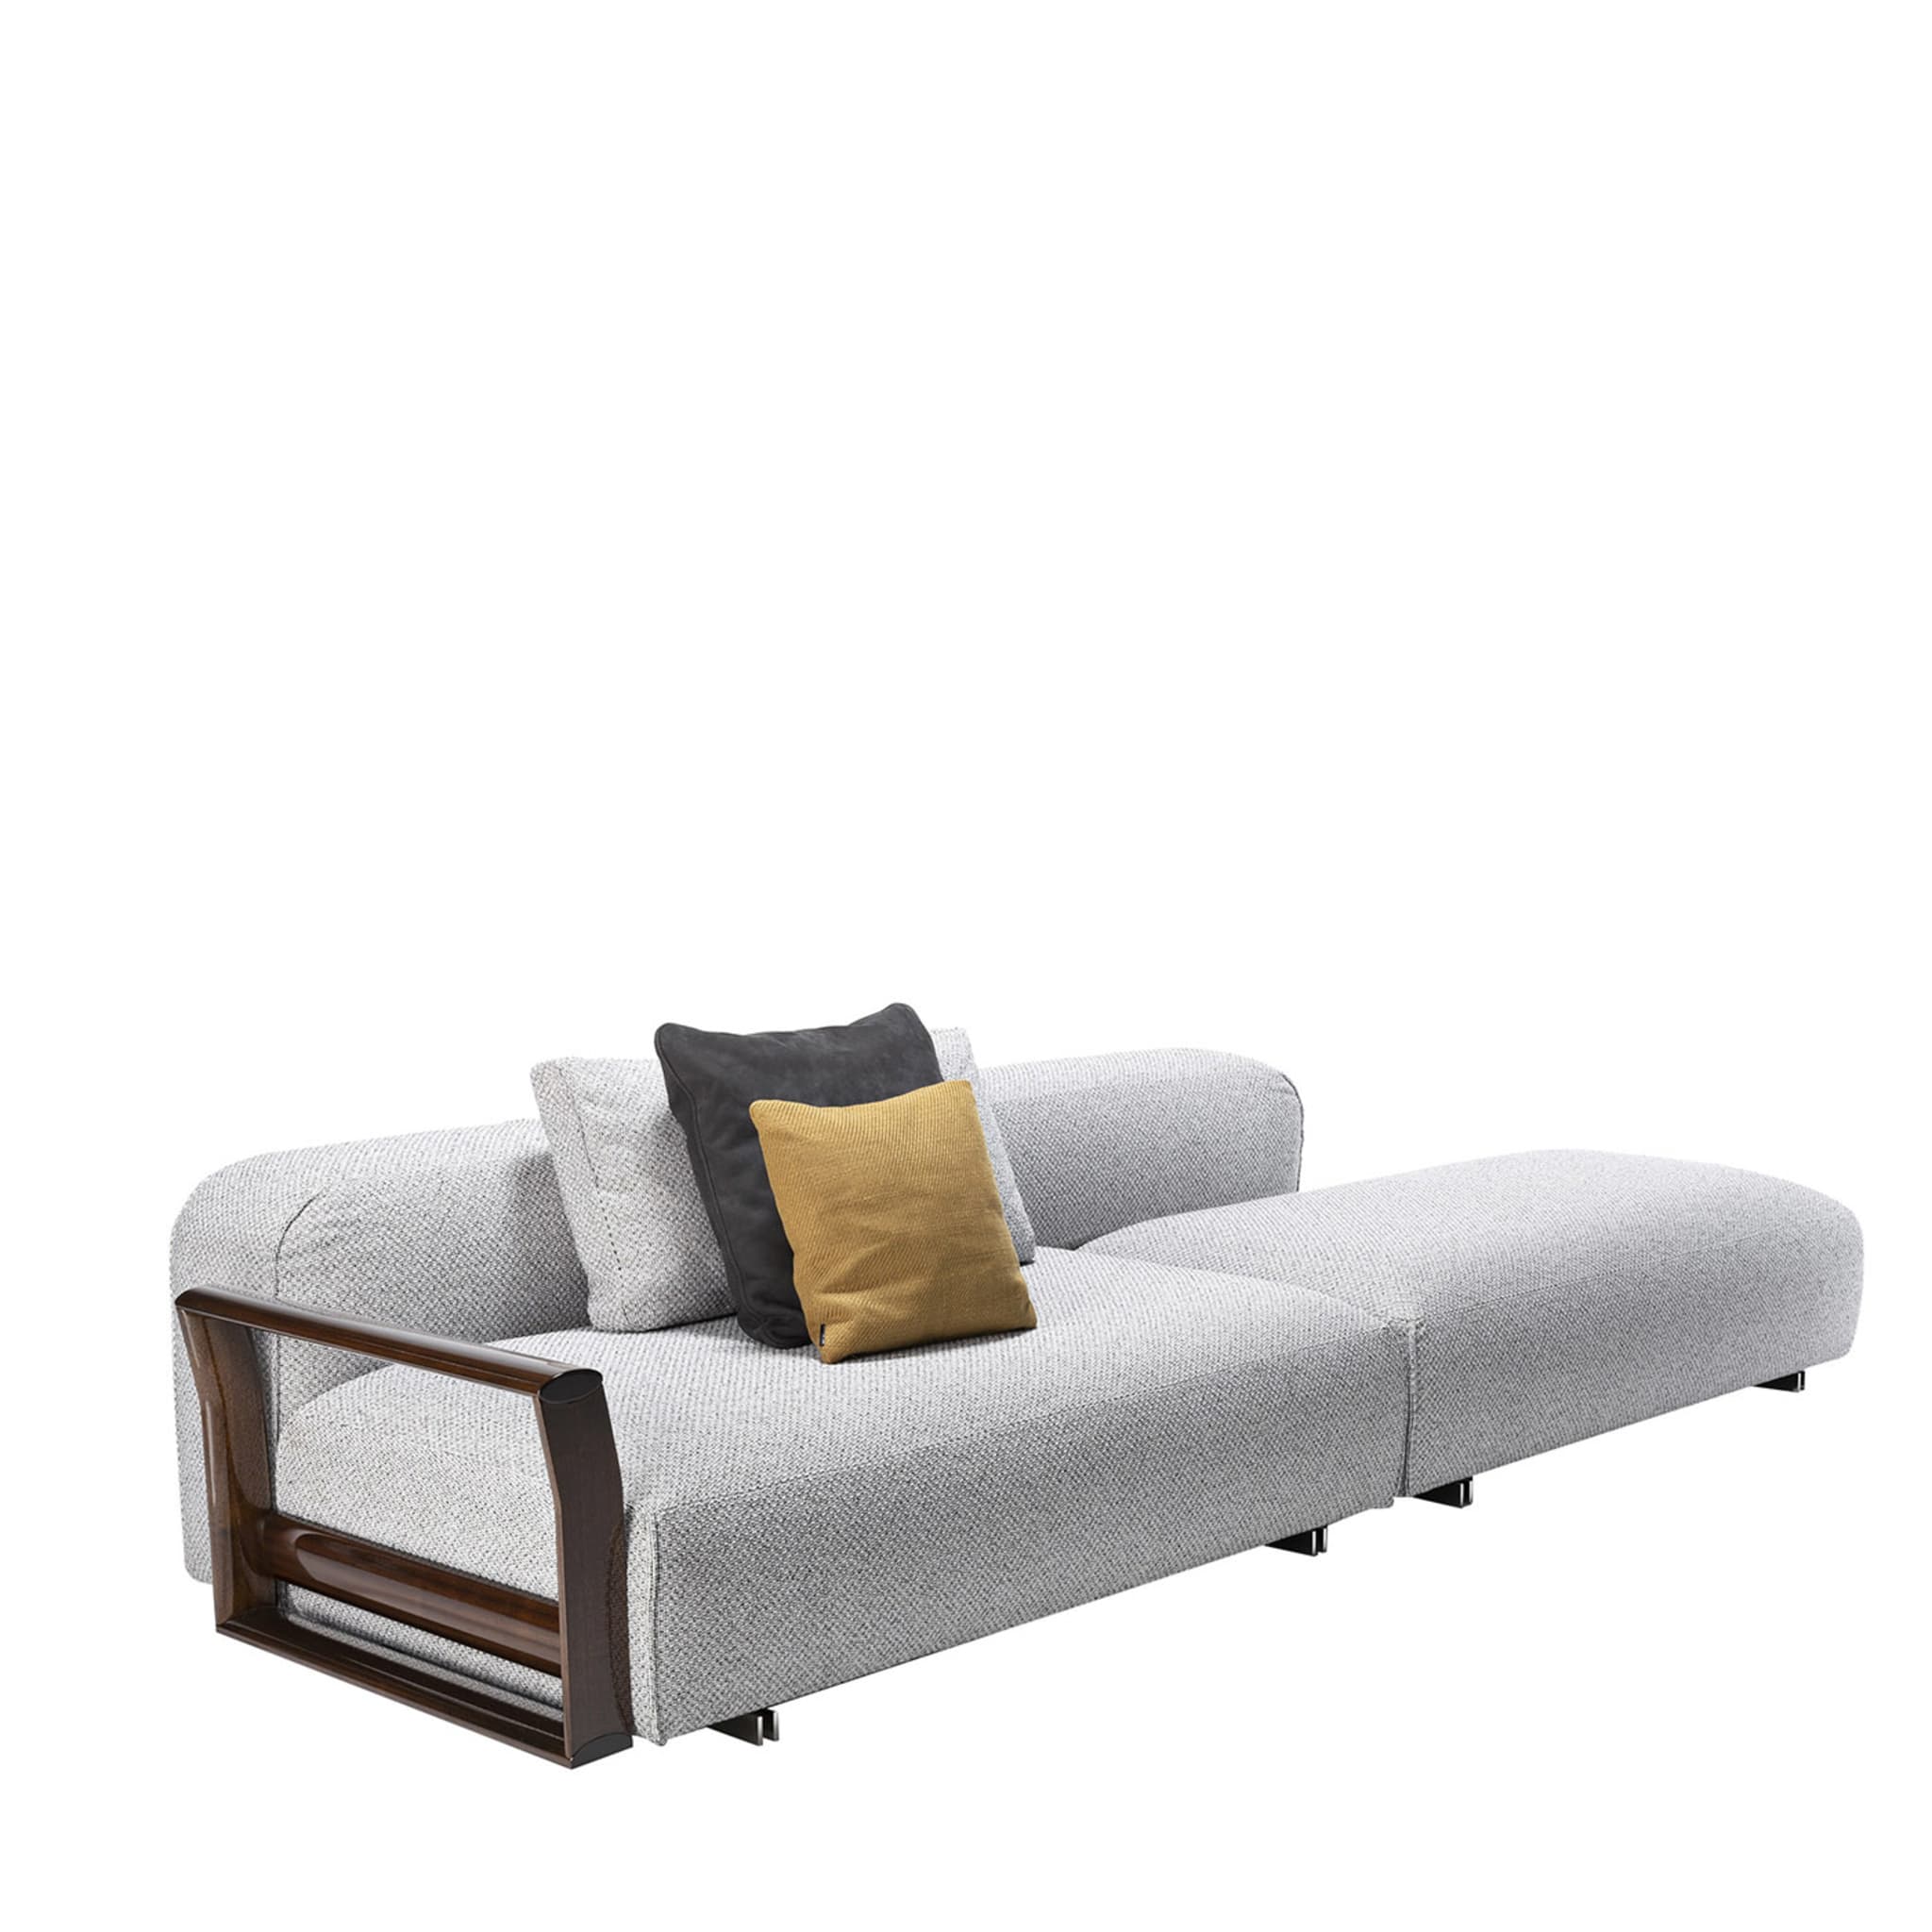 Elba Modular Barrique + Gray Sofa by Massimo Castagna - Main view